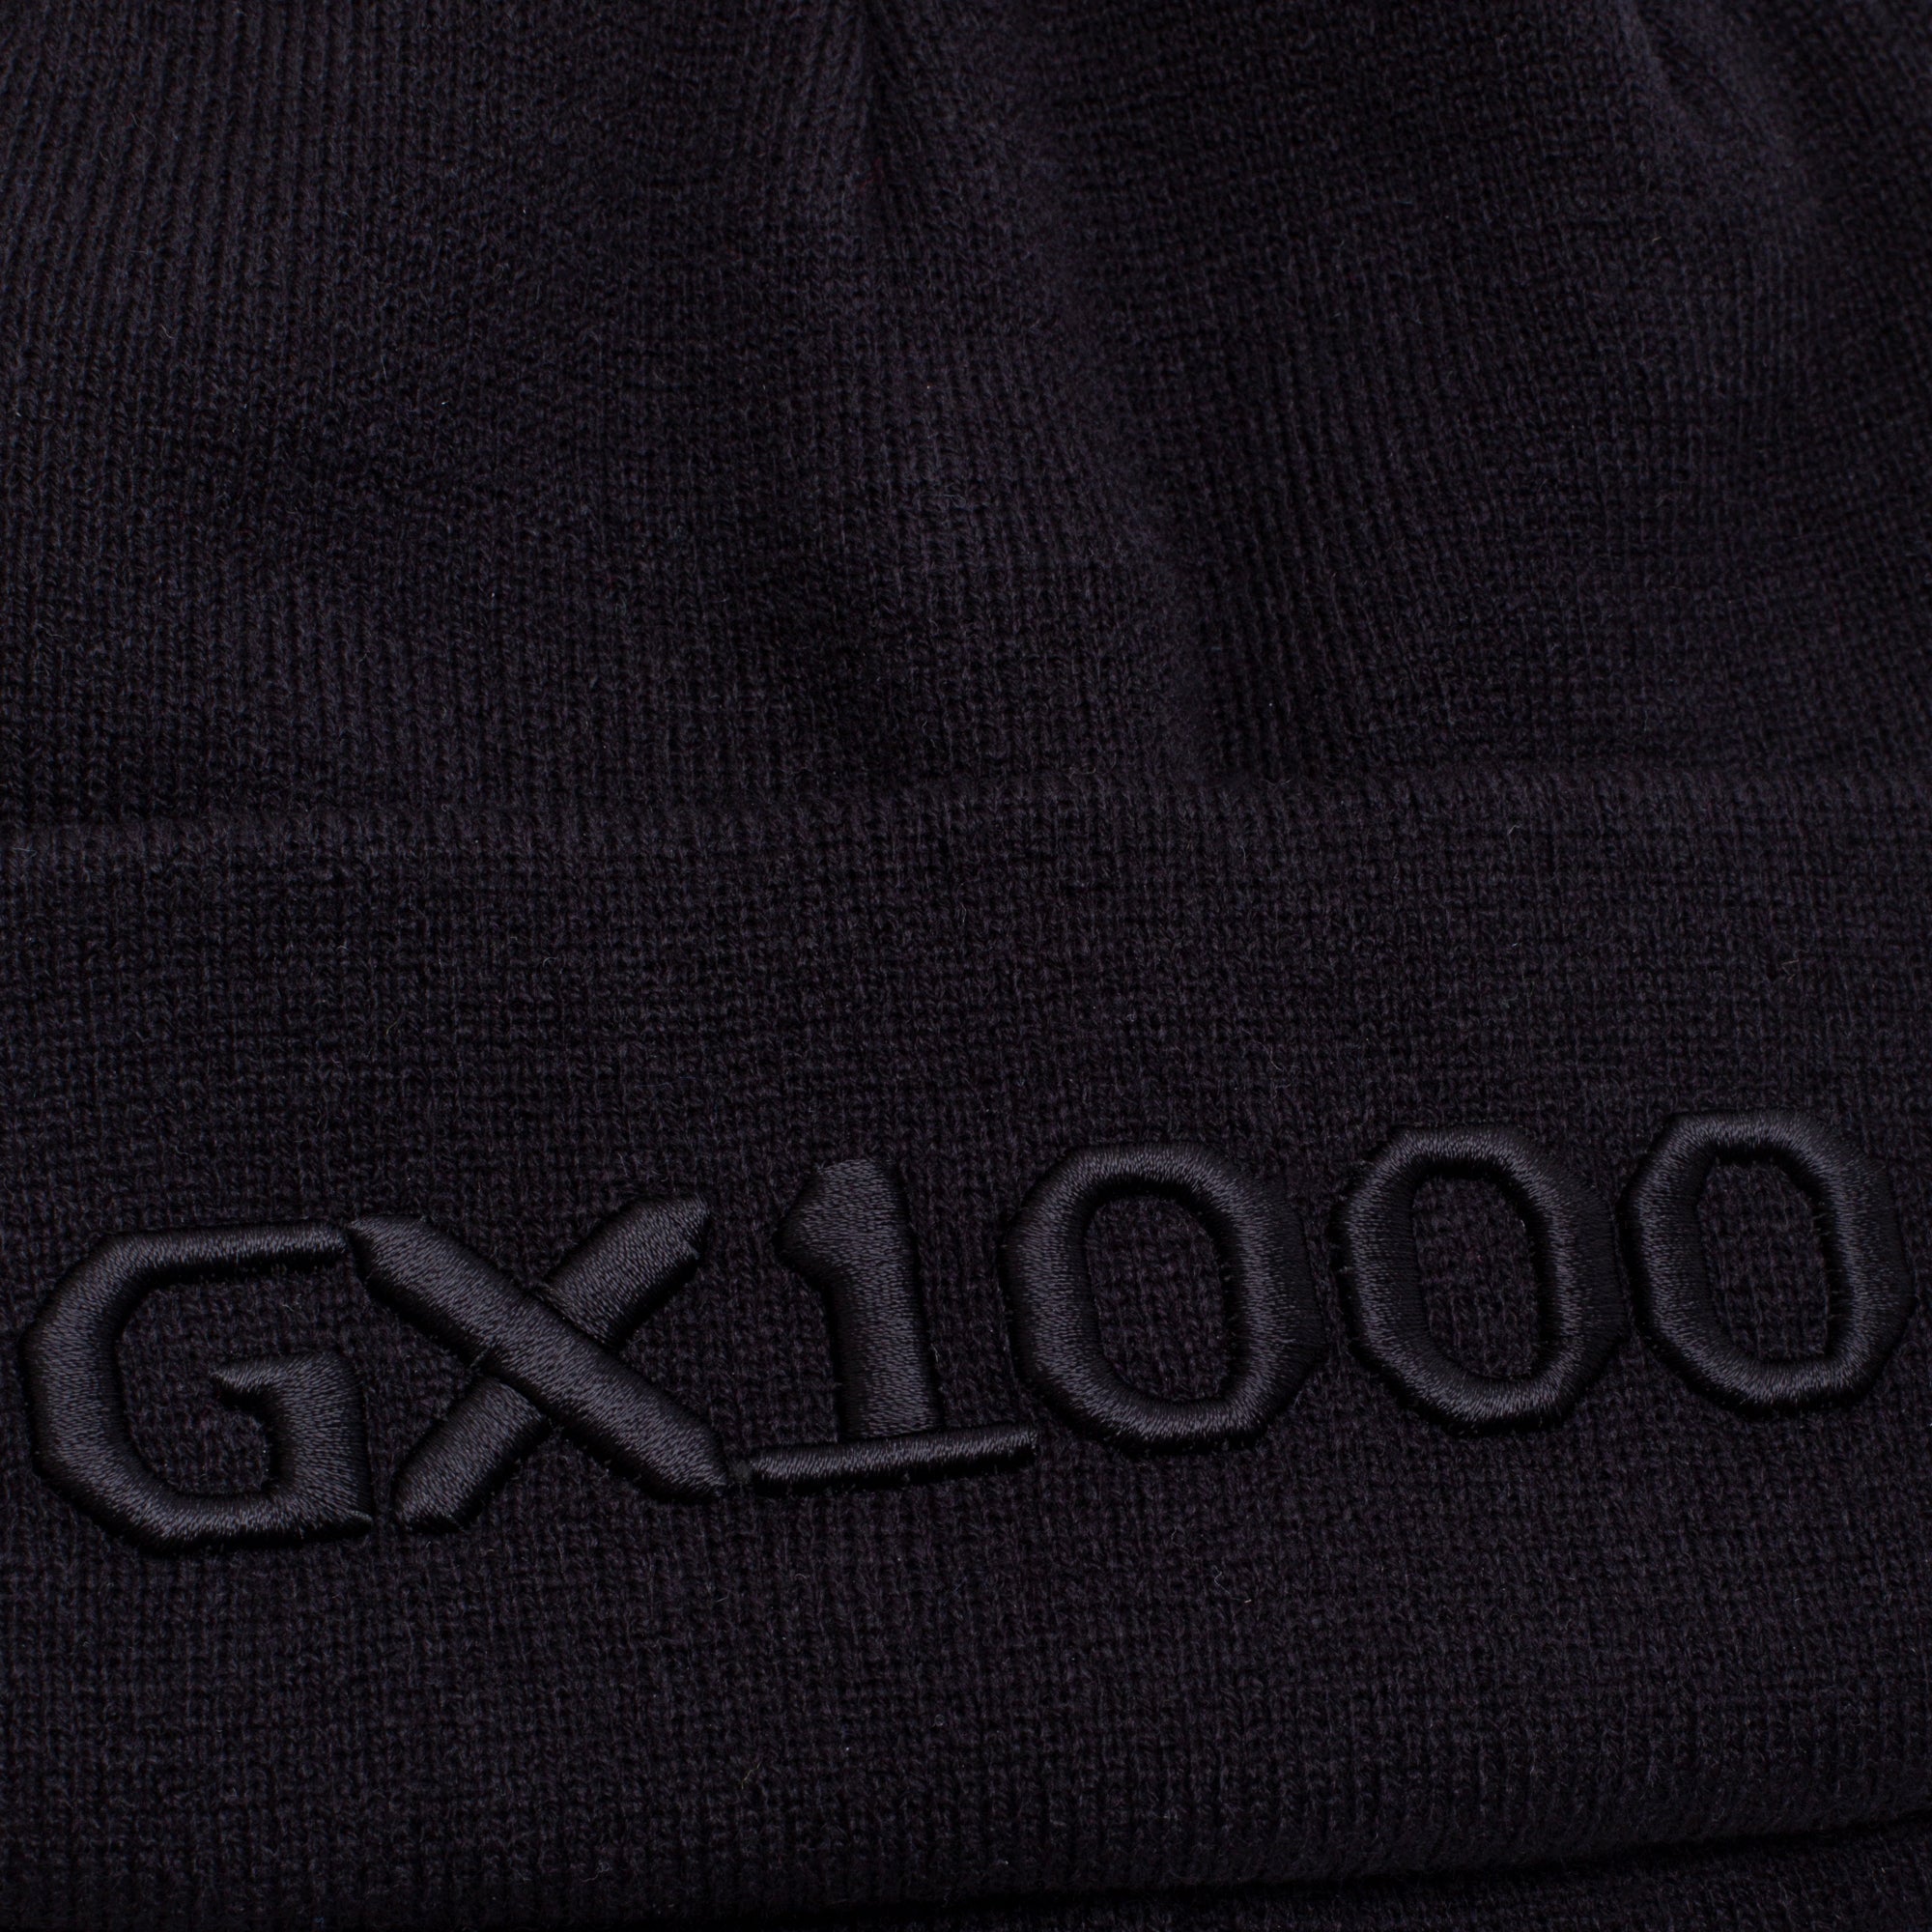 GX1000 - OG Logo Beanie - Black